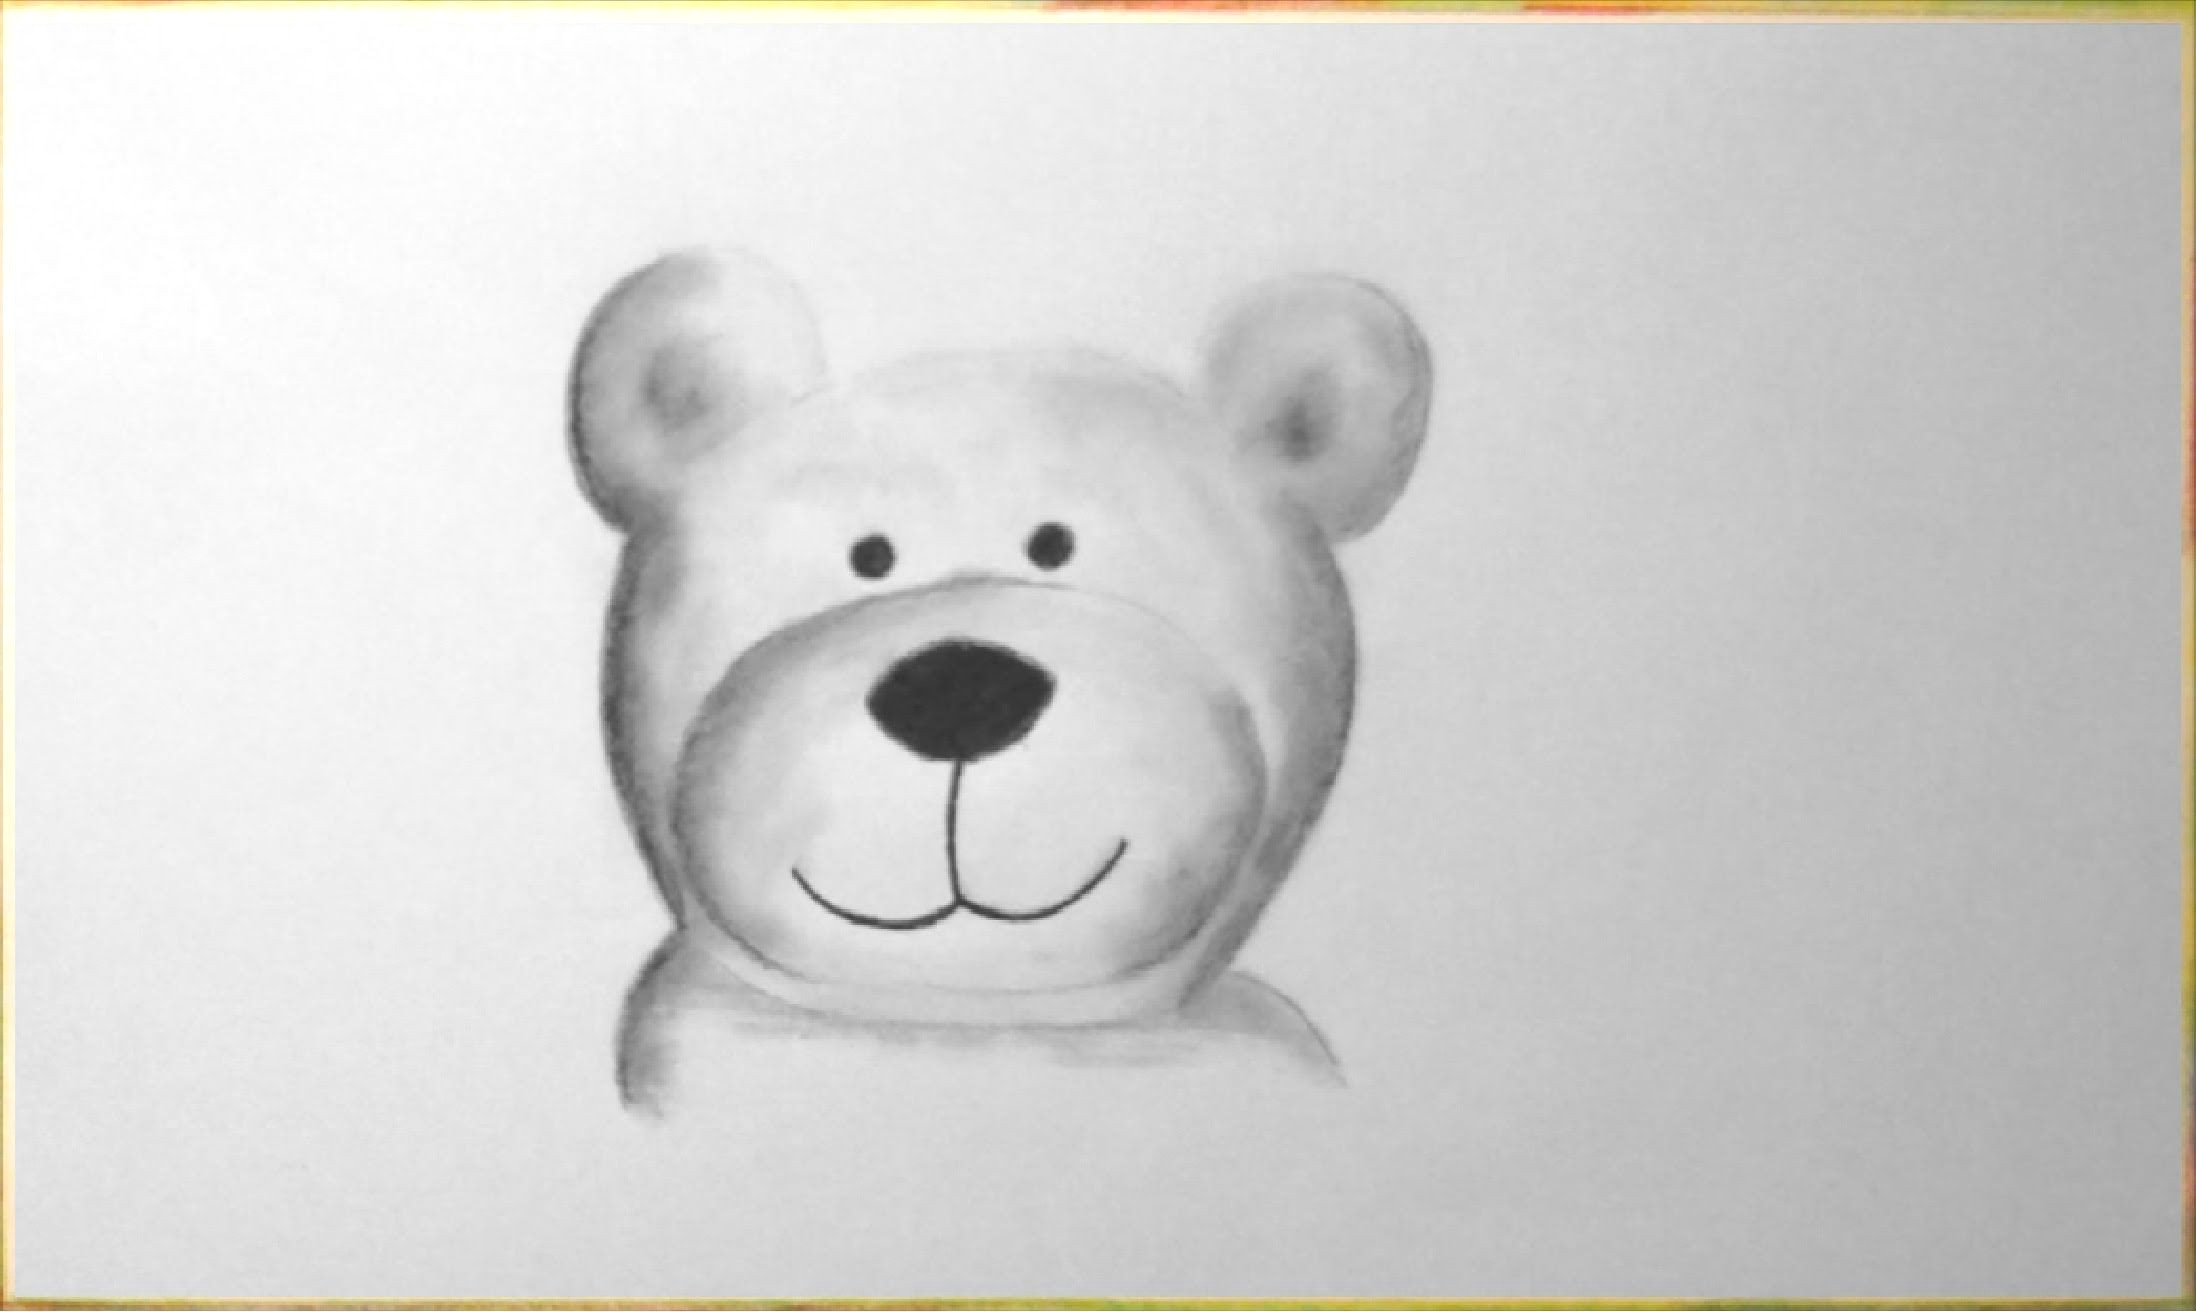 I M Drawing A Bear Kuschel Bar Zeichnen Im Zeitraffer Cuddly Bear Drawing In Fast